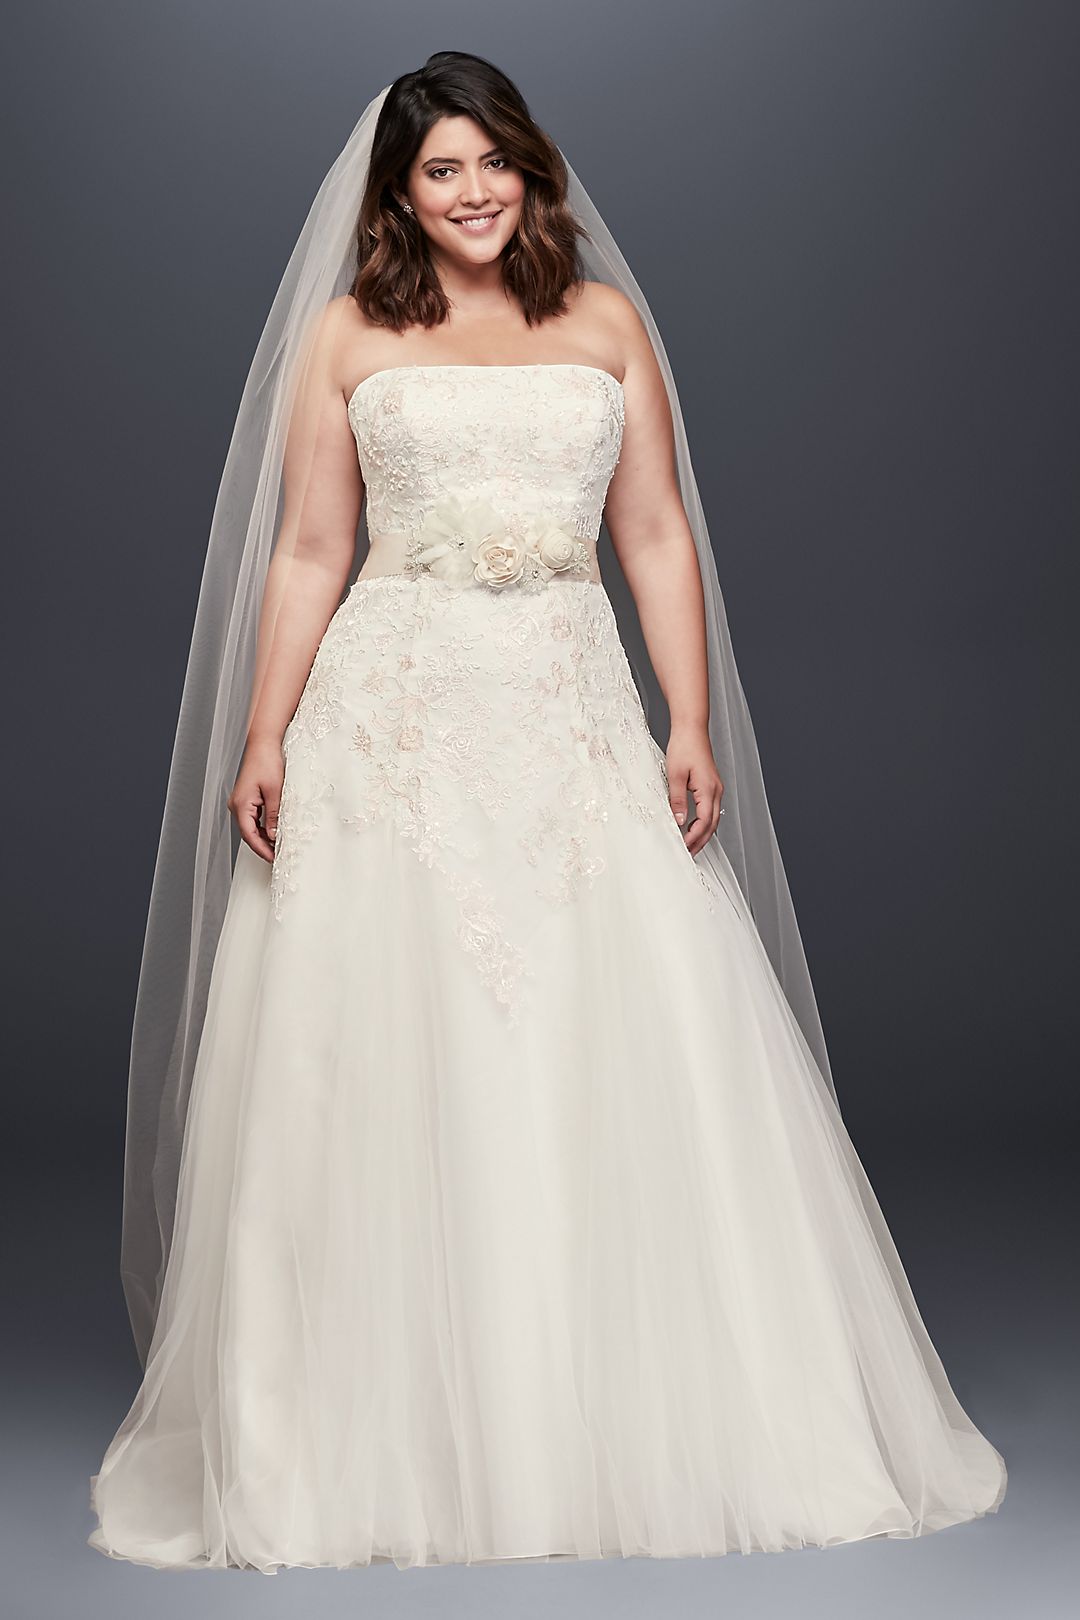 Lace-Appliqued Tulle A-Line Wedding Dress  Image 1